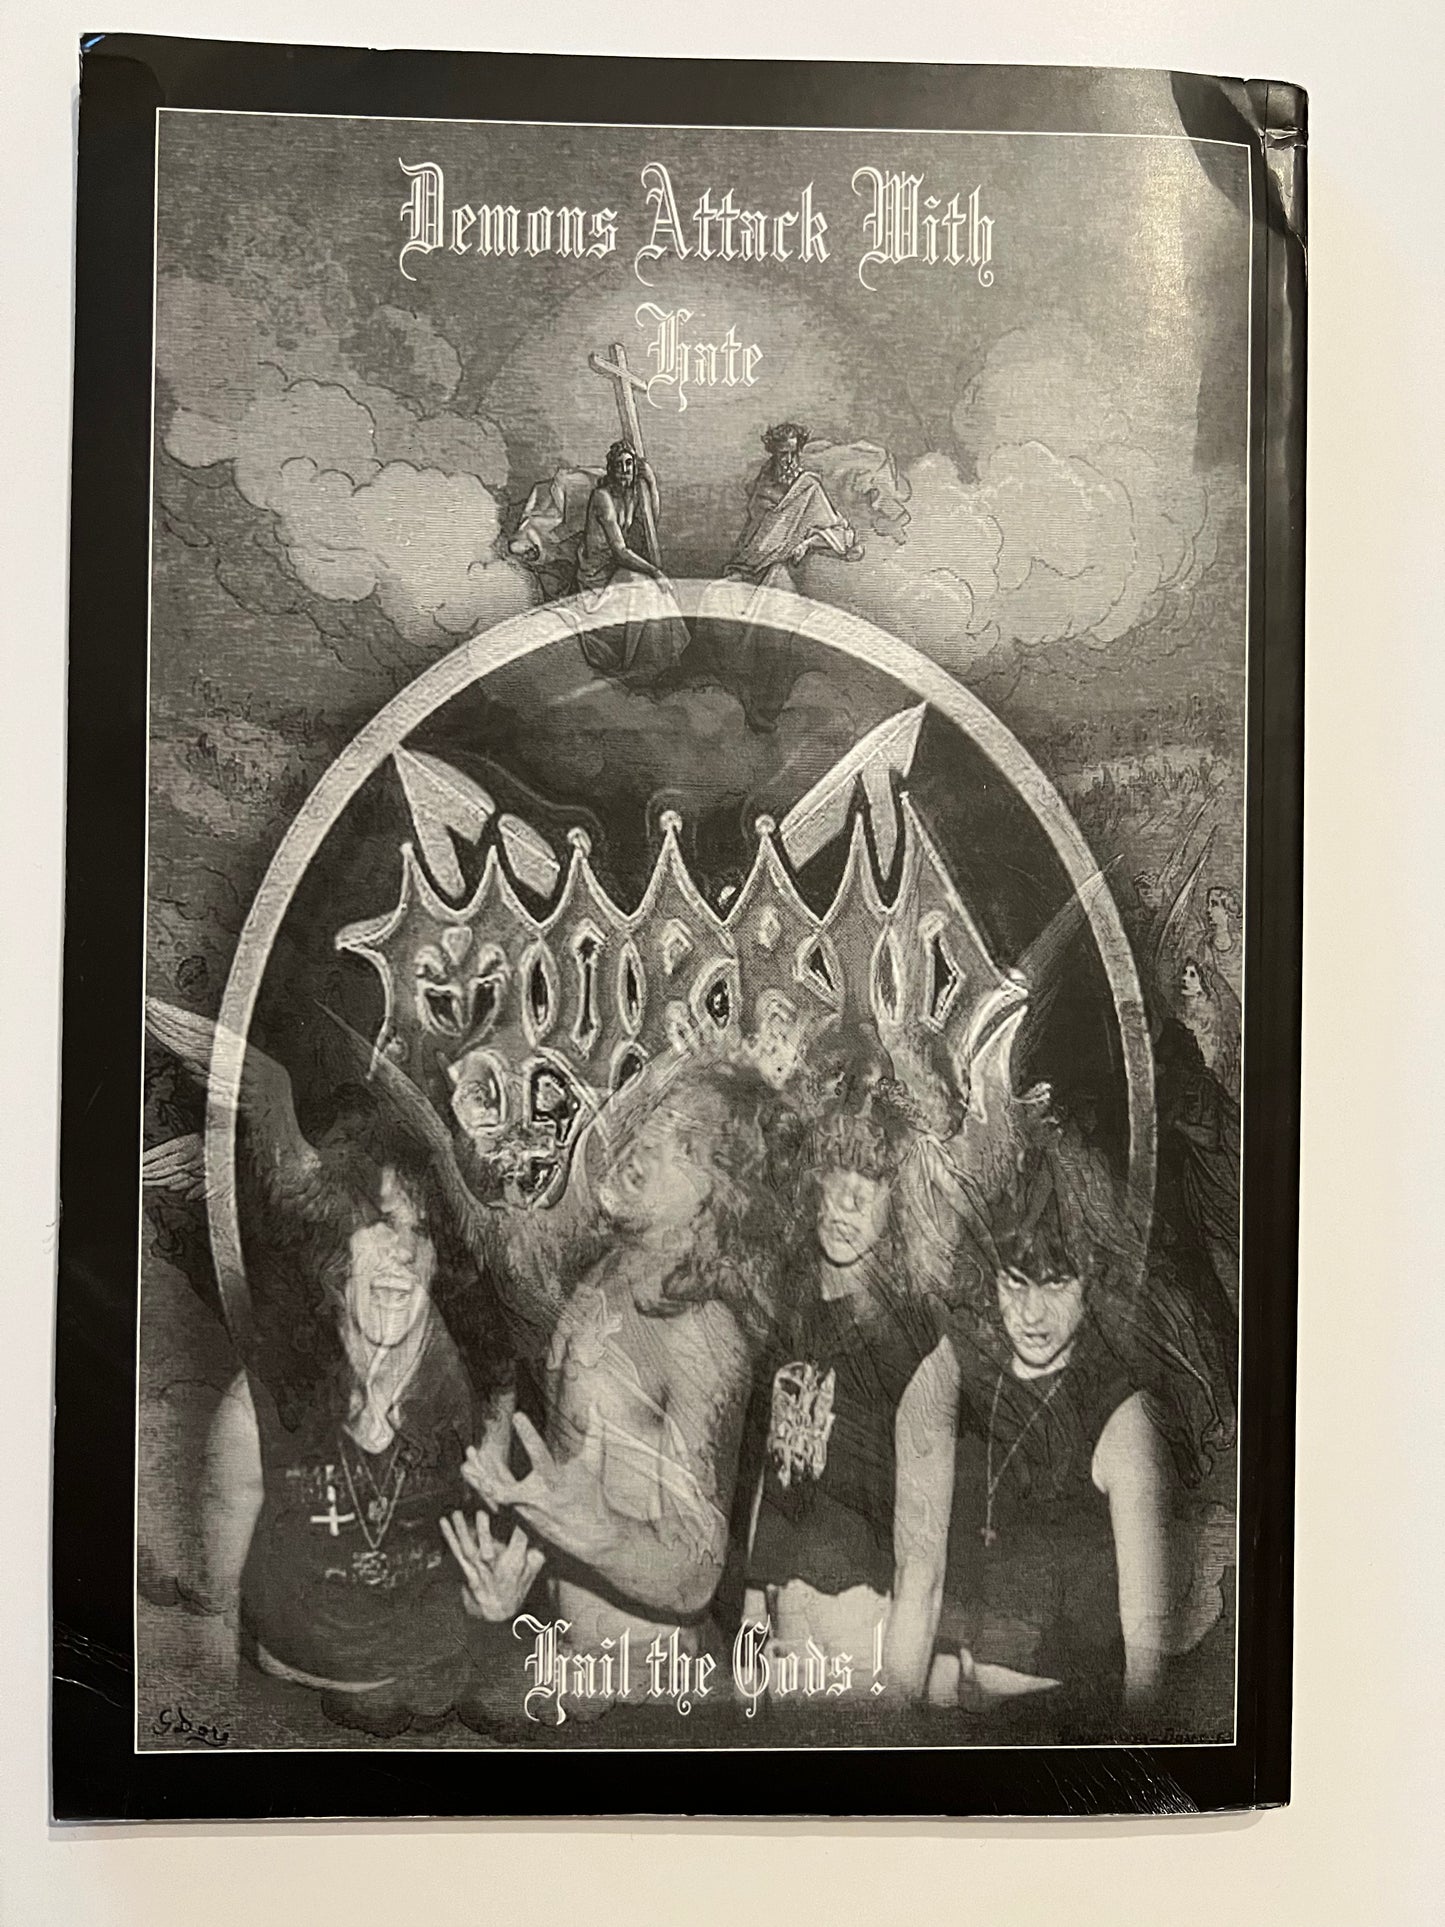 German. Rare Black Metal Fanzine and Compilation cd